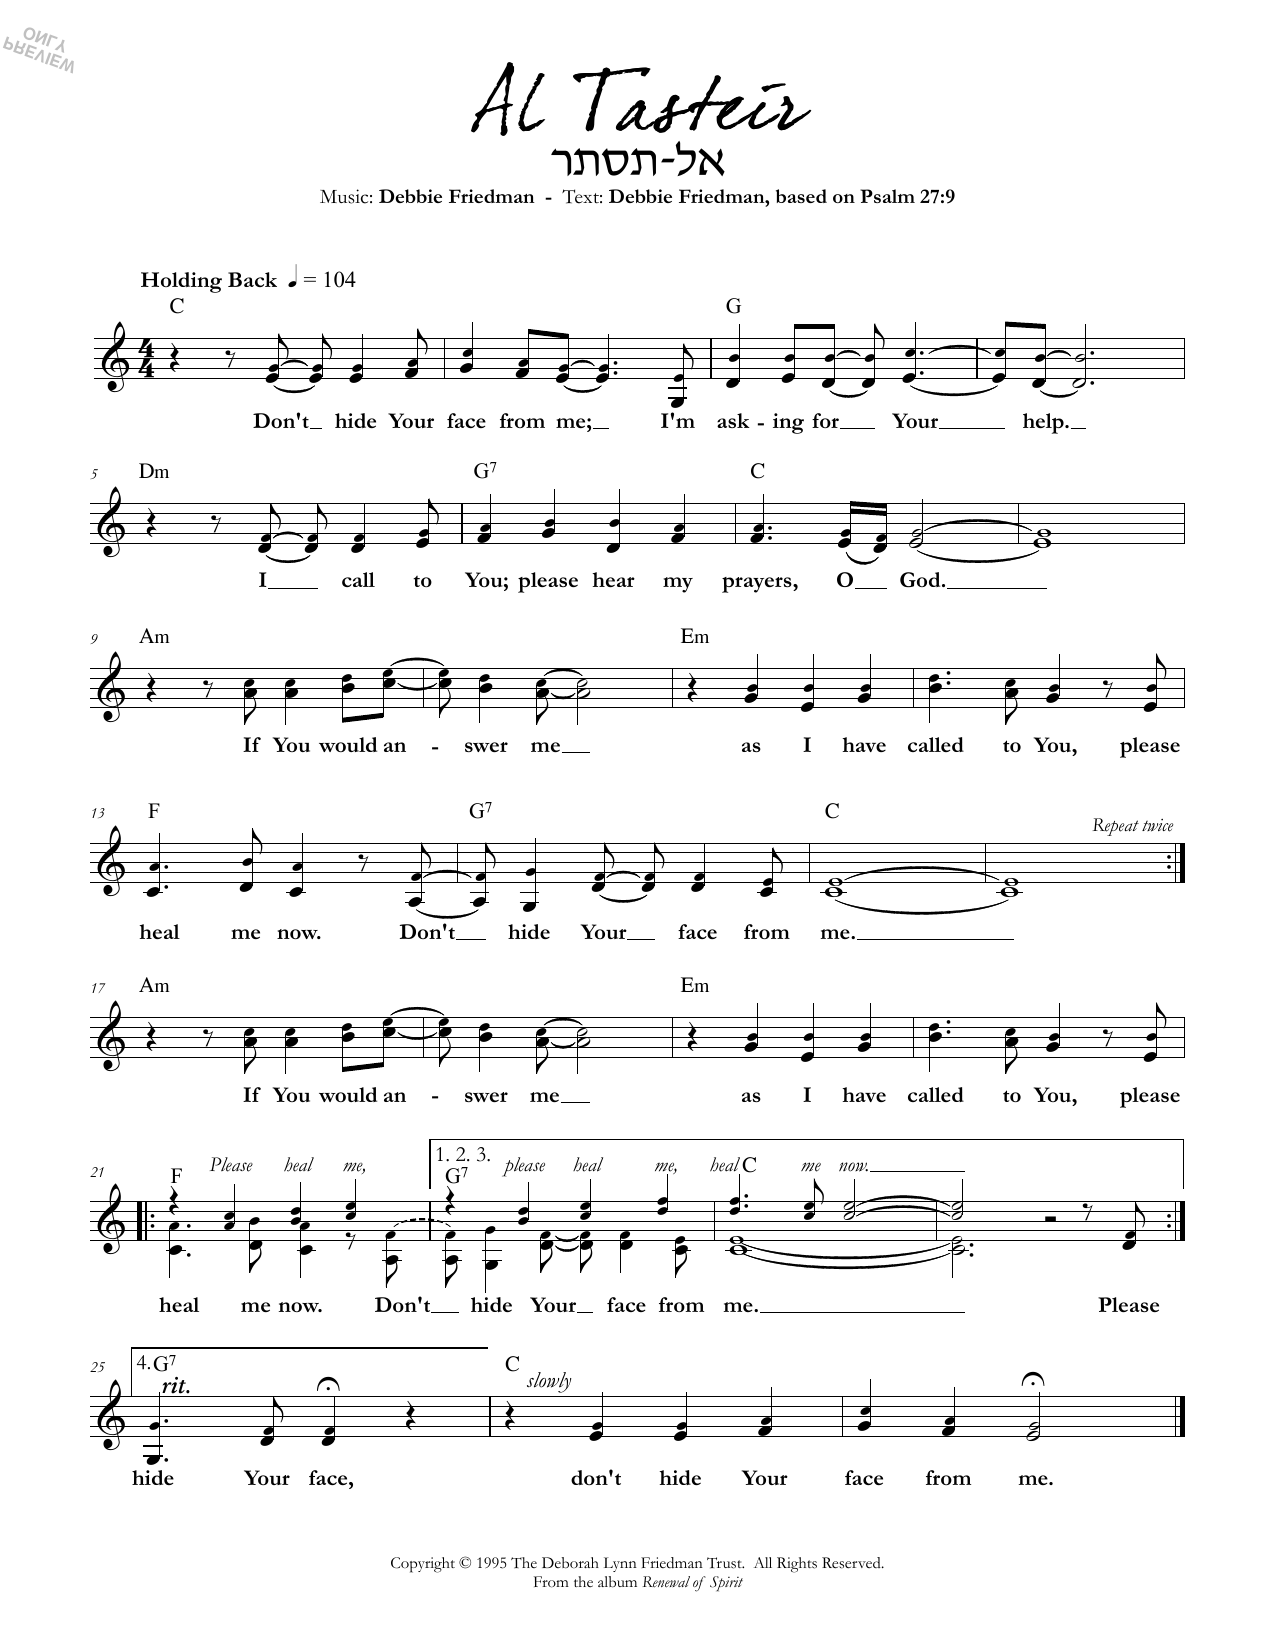 Debbie Friedman Al Tasteir Sheet Music Notes & Chords for Lead Sheet / Fake Book - Download or Print PDF